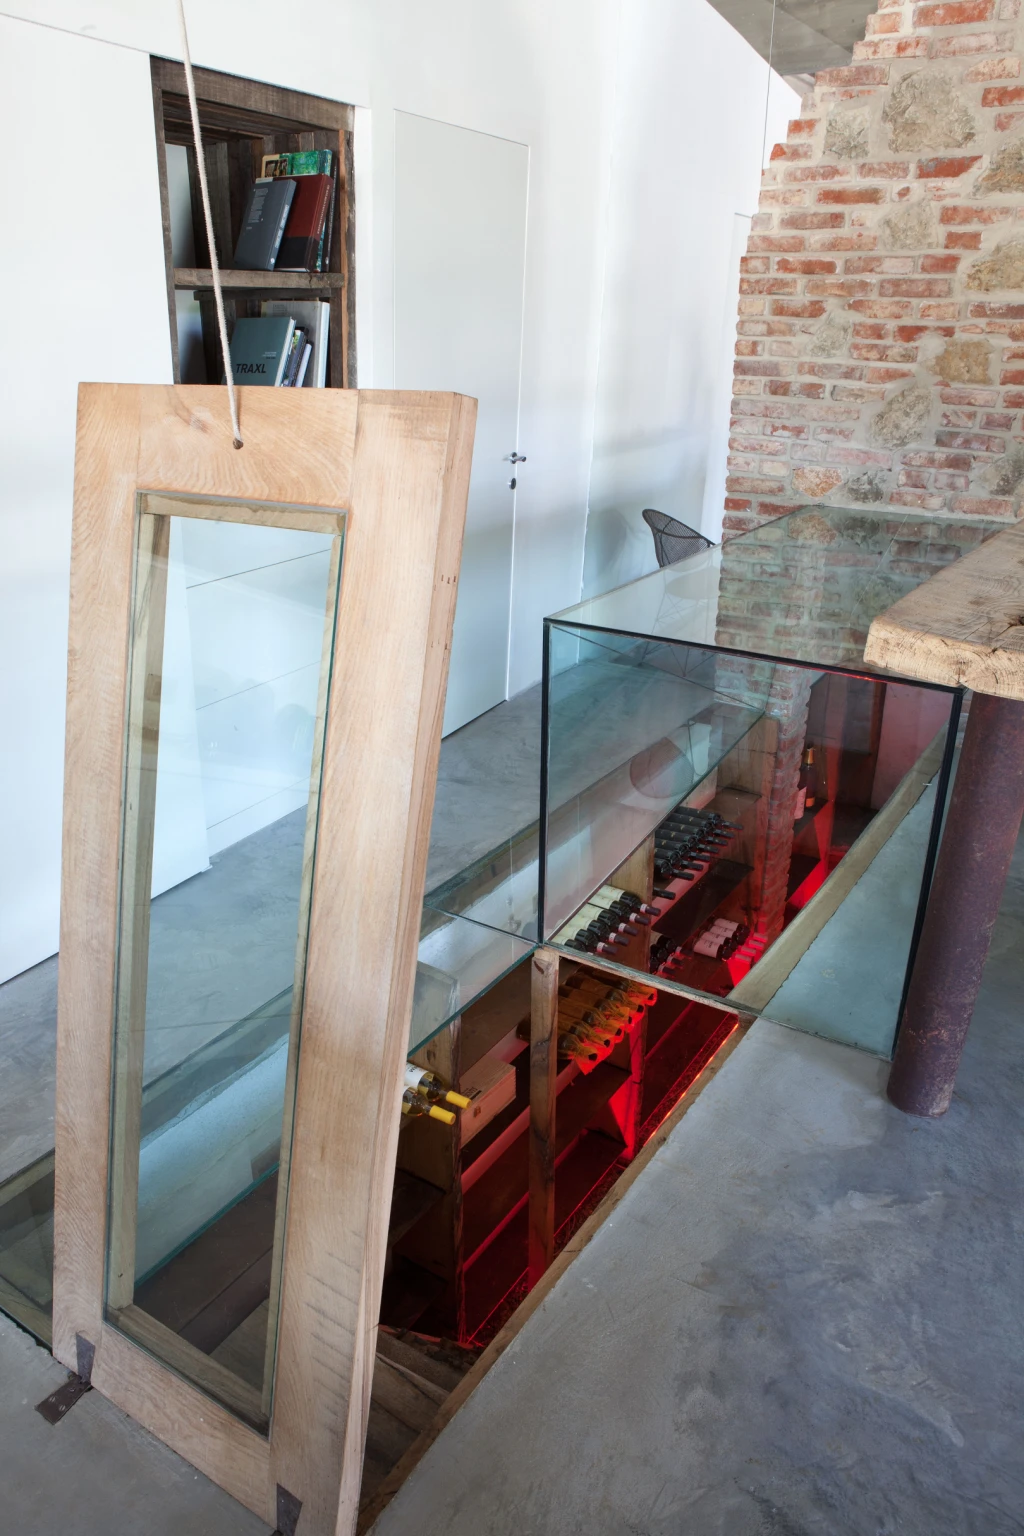 A secret wine cellar - contemporary design - hidden underneath the floor